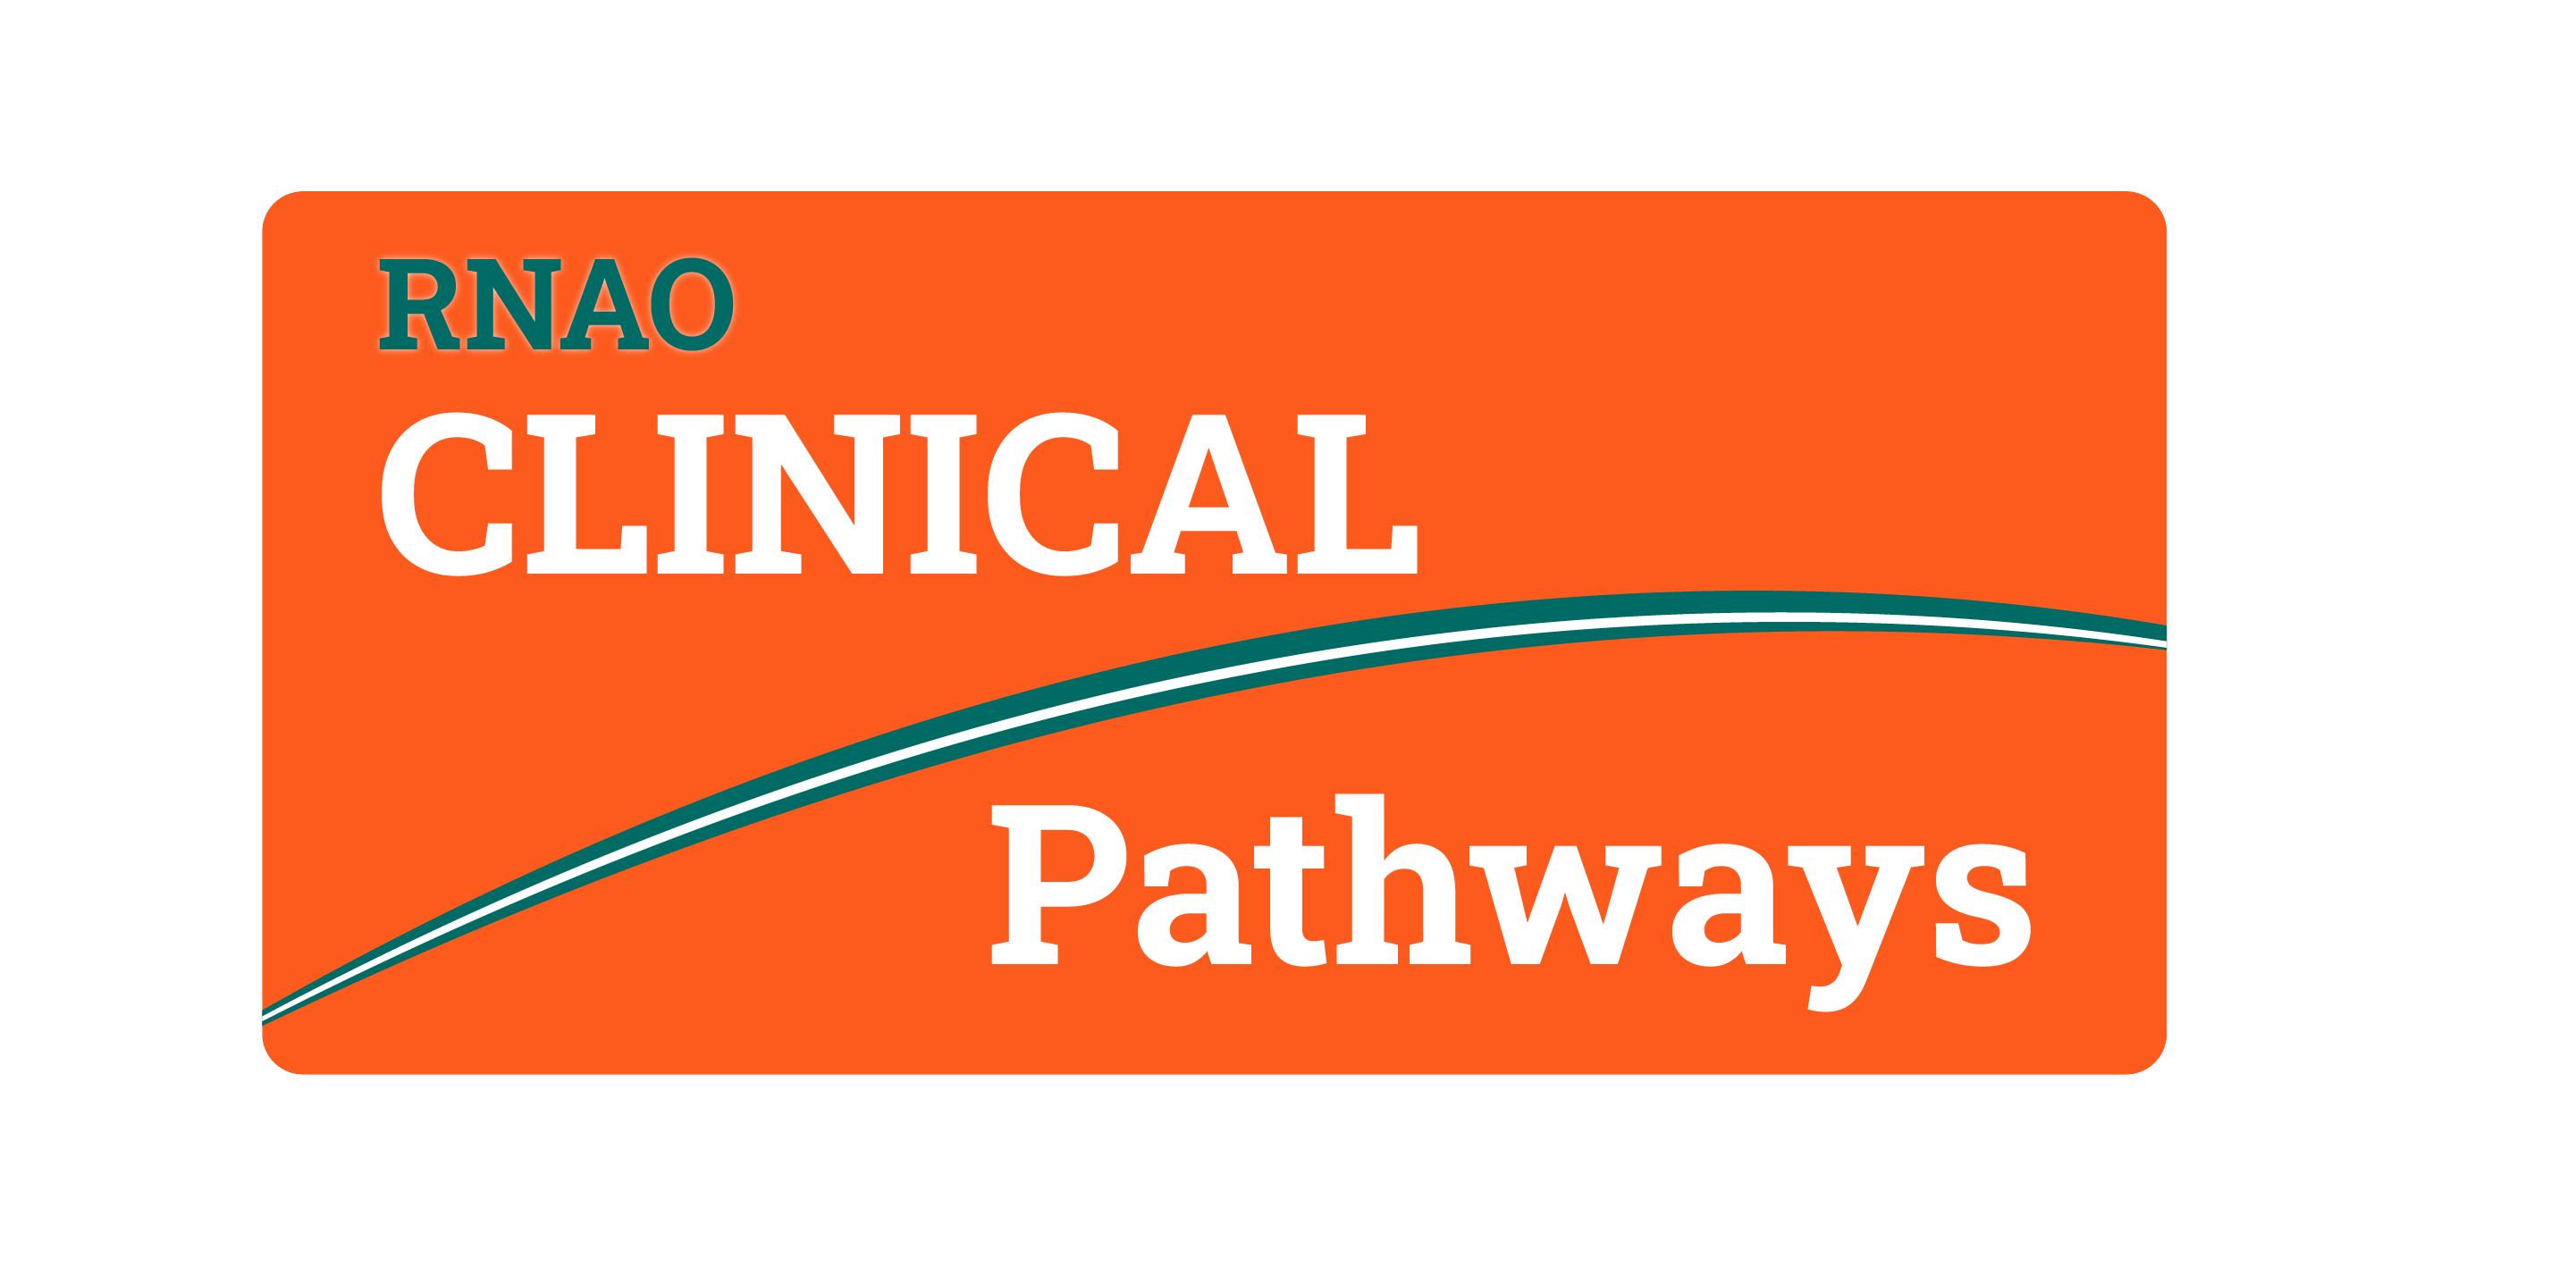 RNAO Clinical Pathways logo